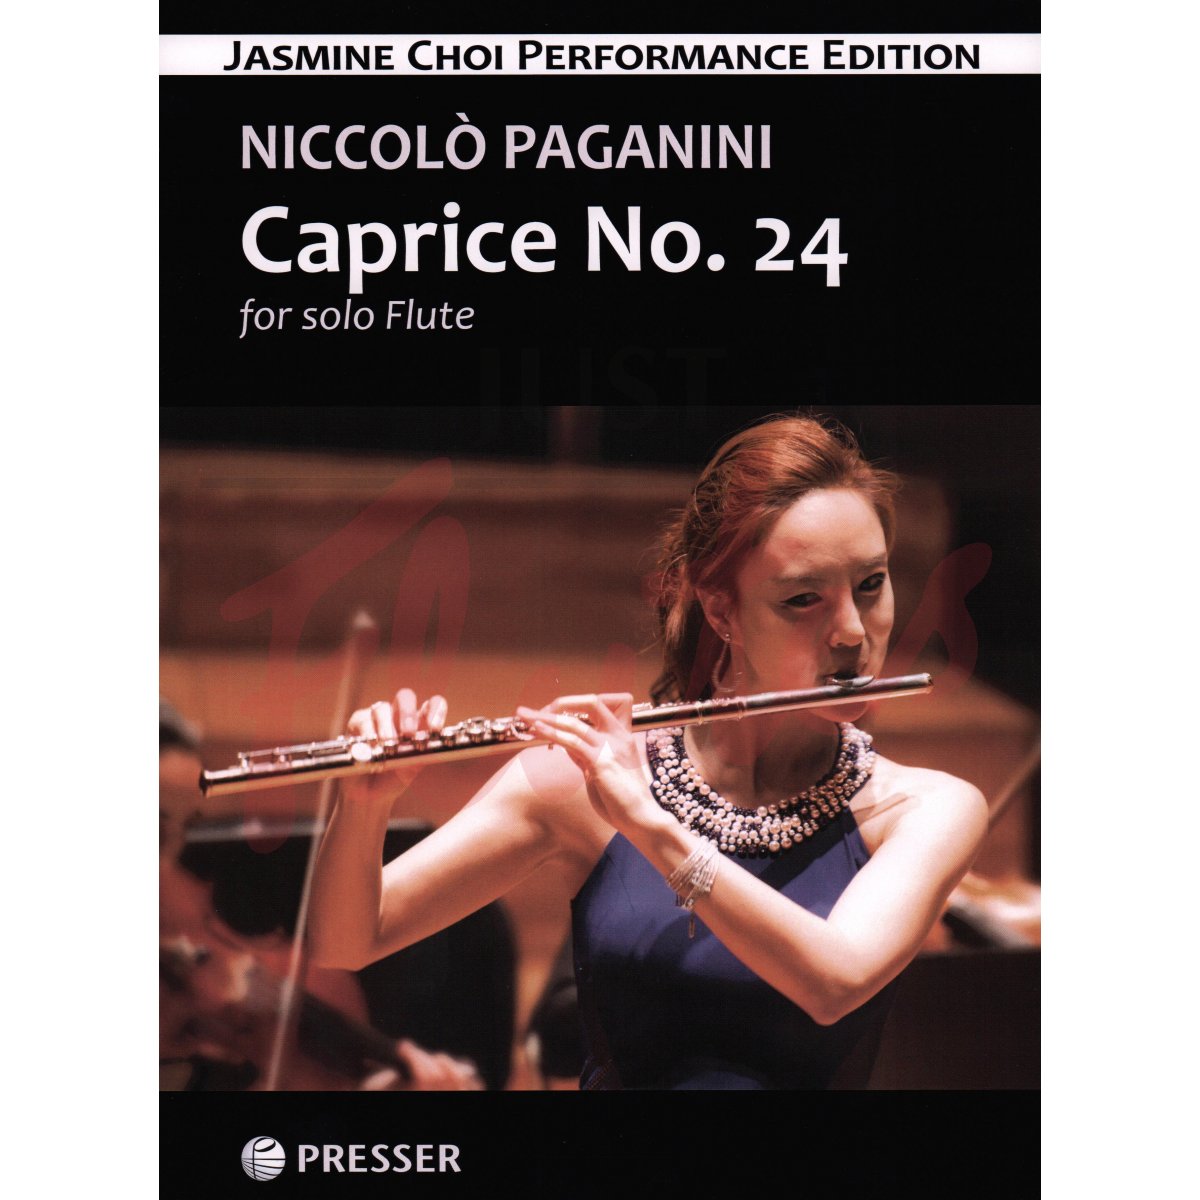 Caprice No. 24 for Solo Flute